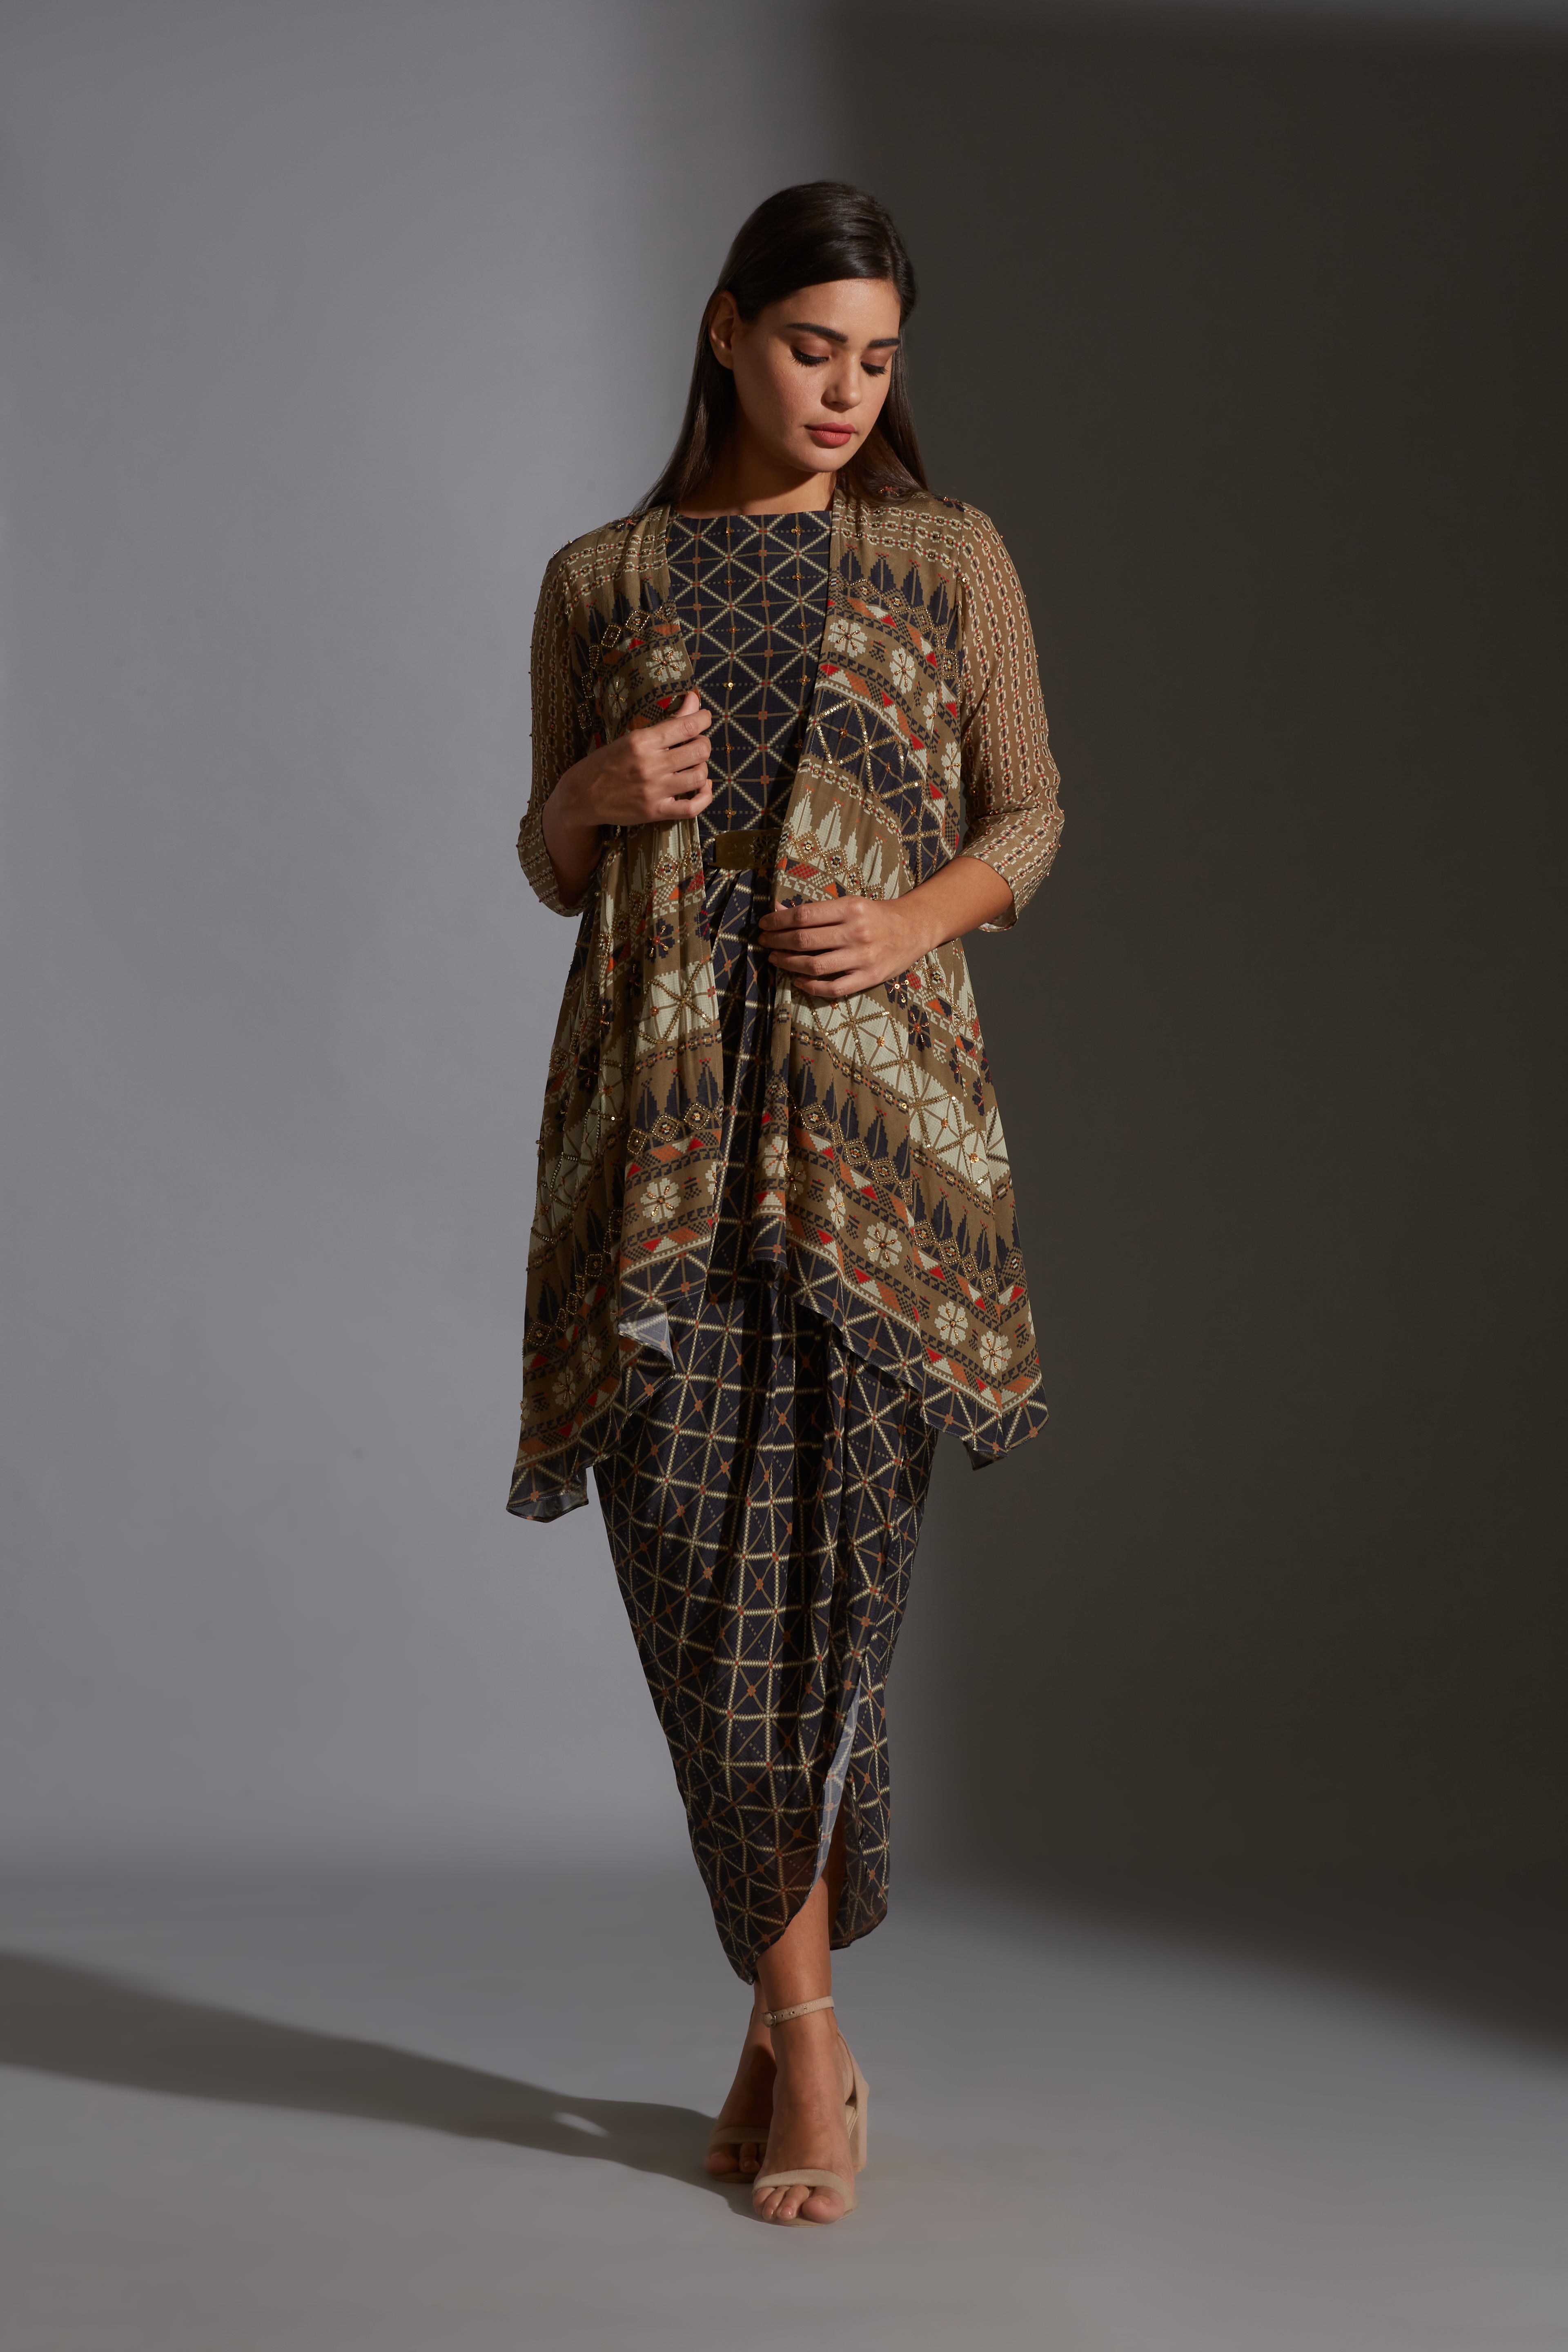 Tiraz Geometrical Printed Drape Dress And Jacket